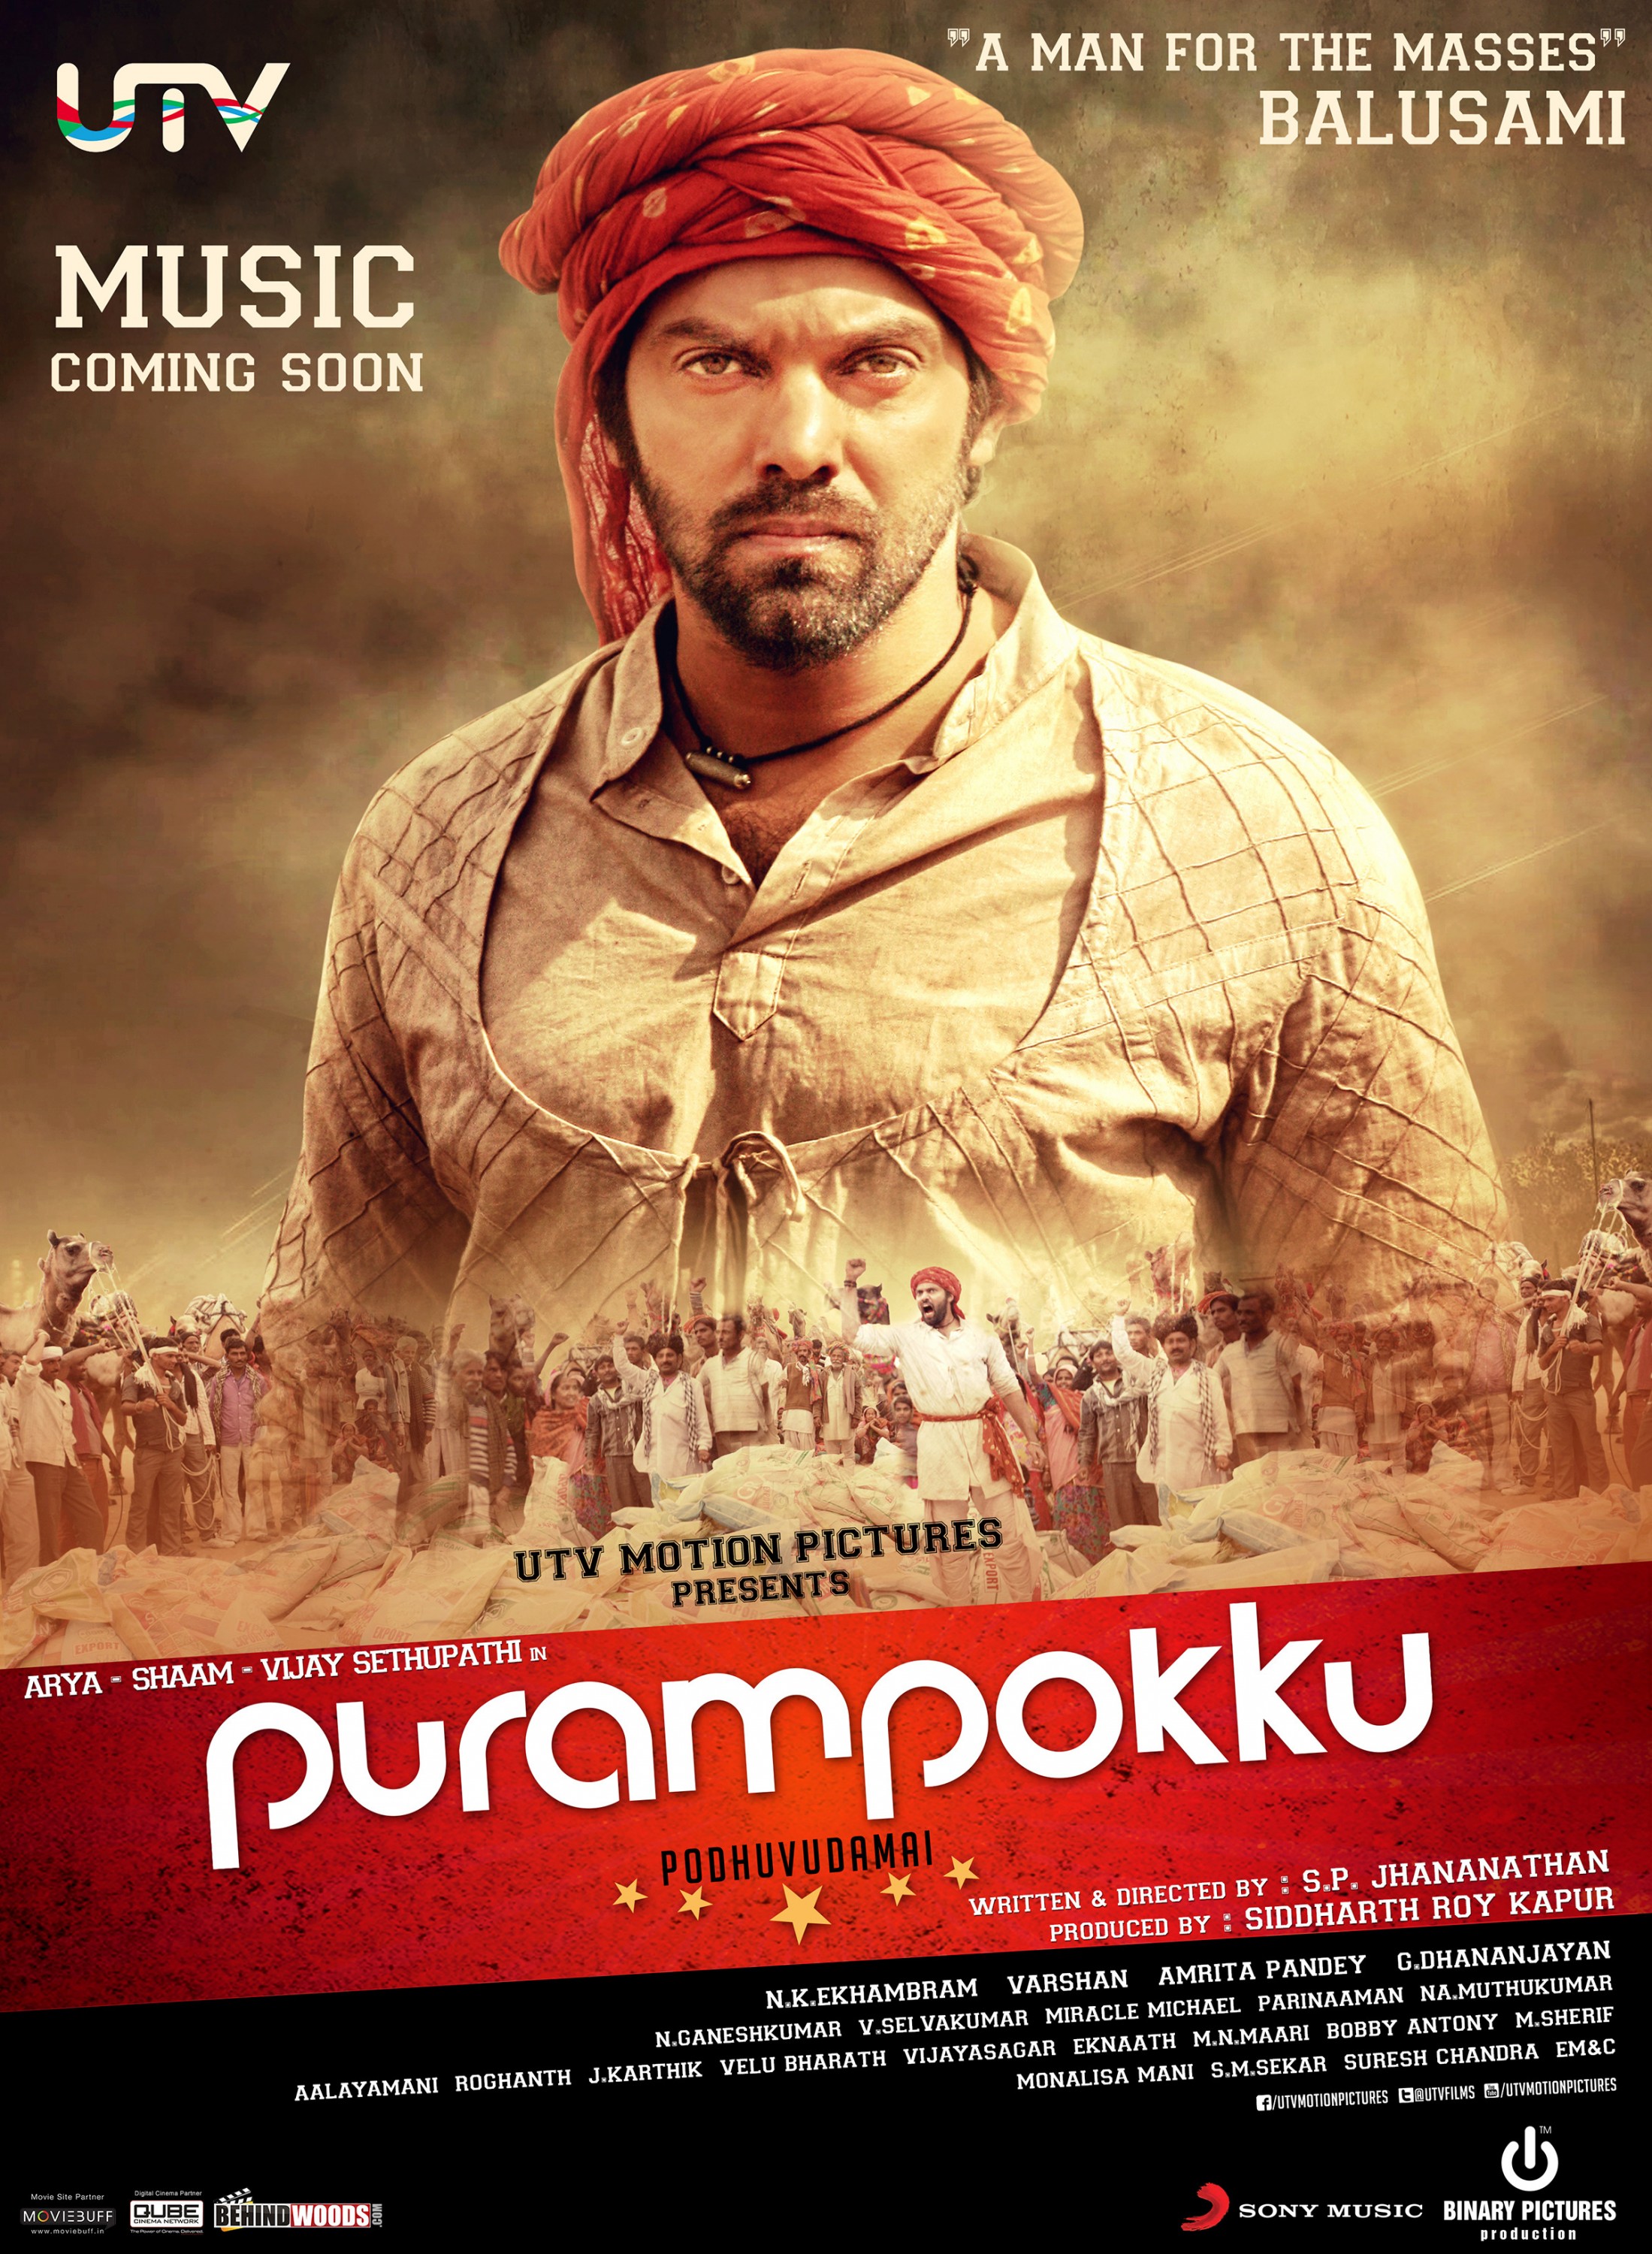 Mega Sized Movie Poster Image for Purampokku Poduvudamai (#3 of 5)